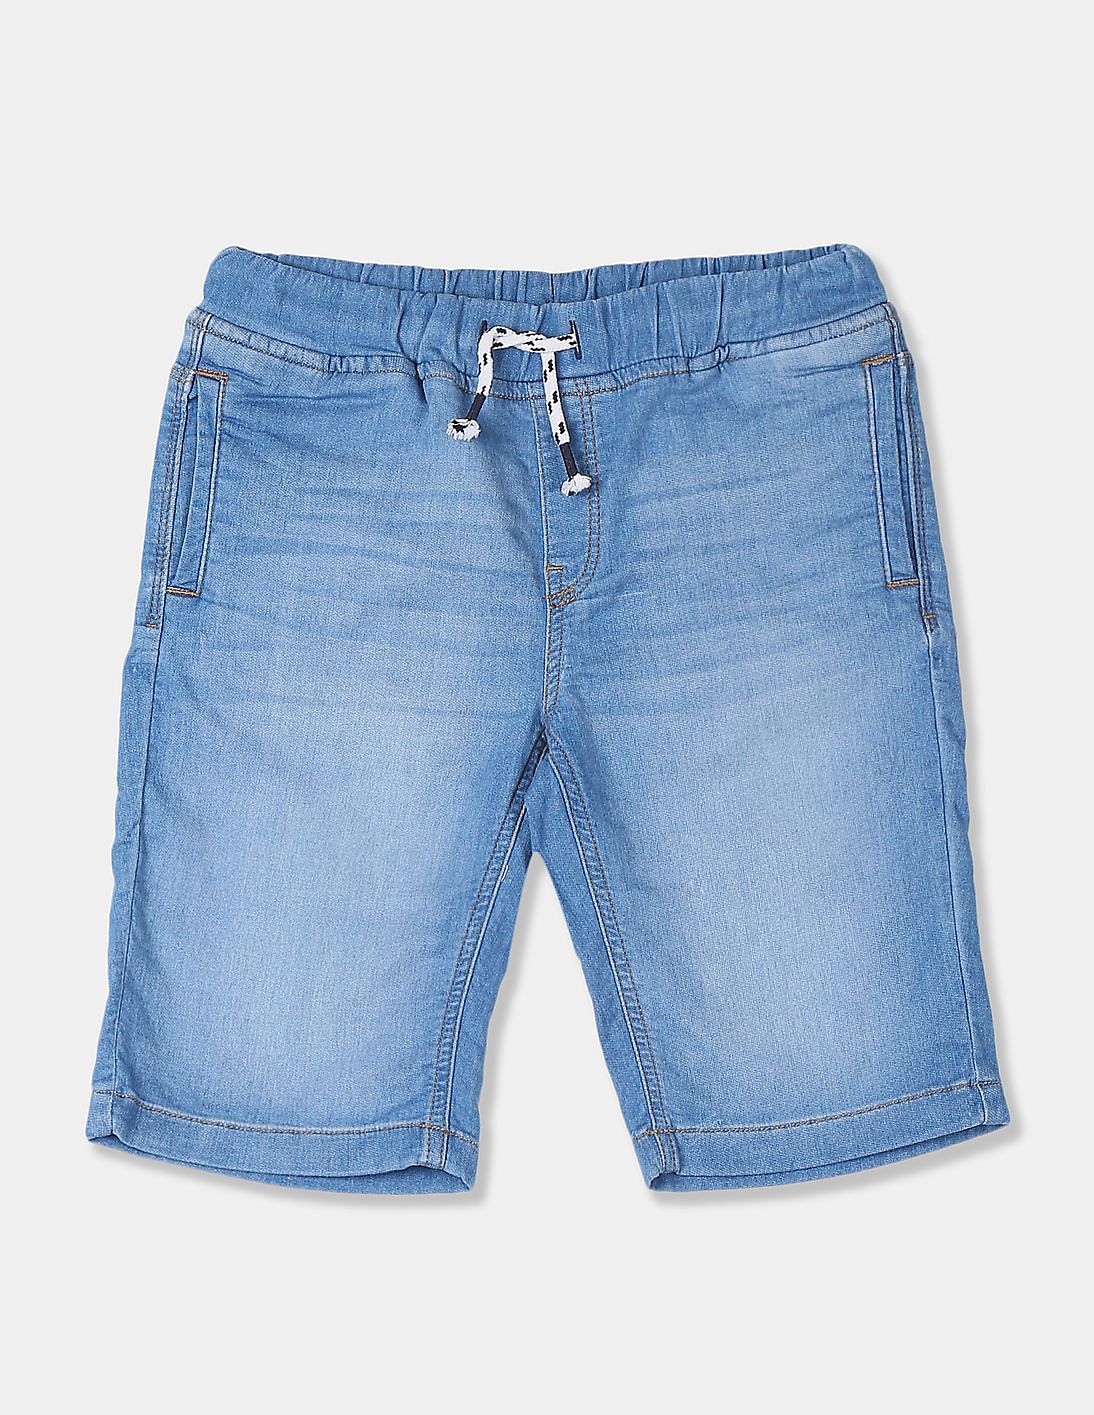 Buy U.S. Polo Assn. Kids Boys Boys Blue Cotton Stretch Denim Shorts ...